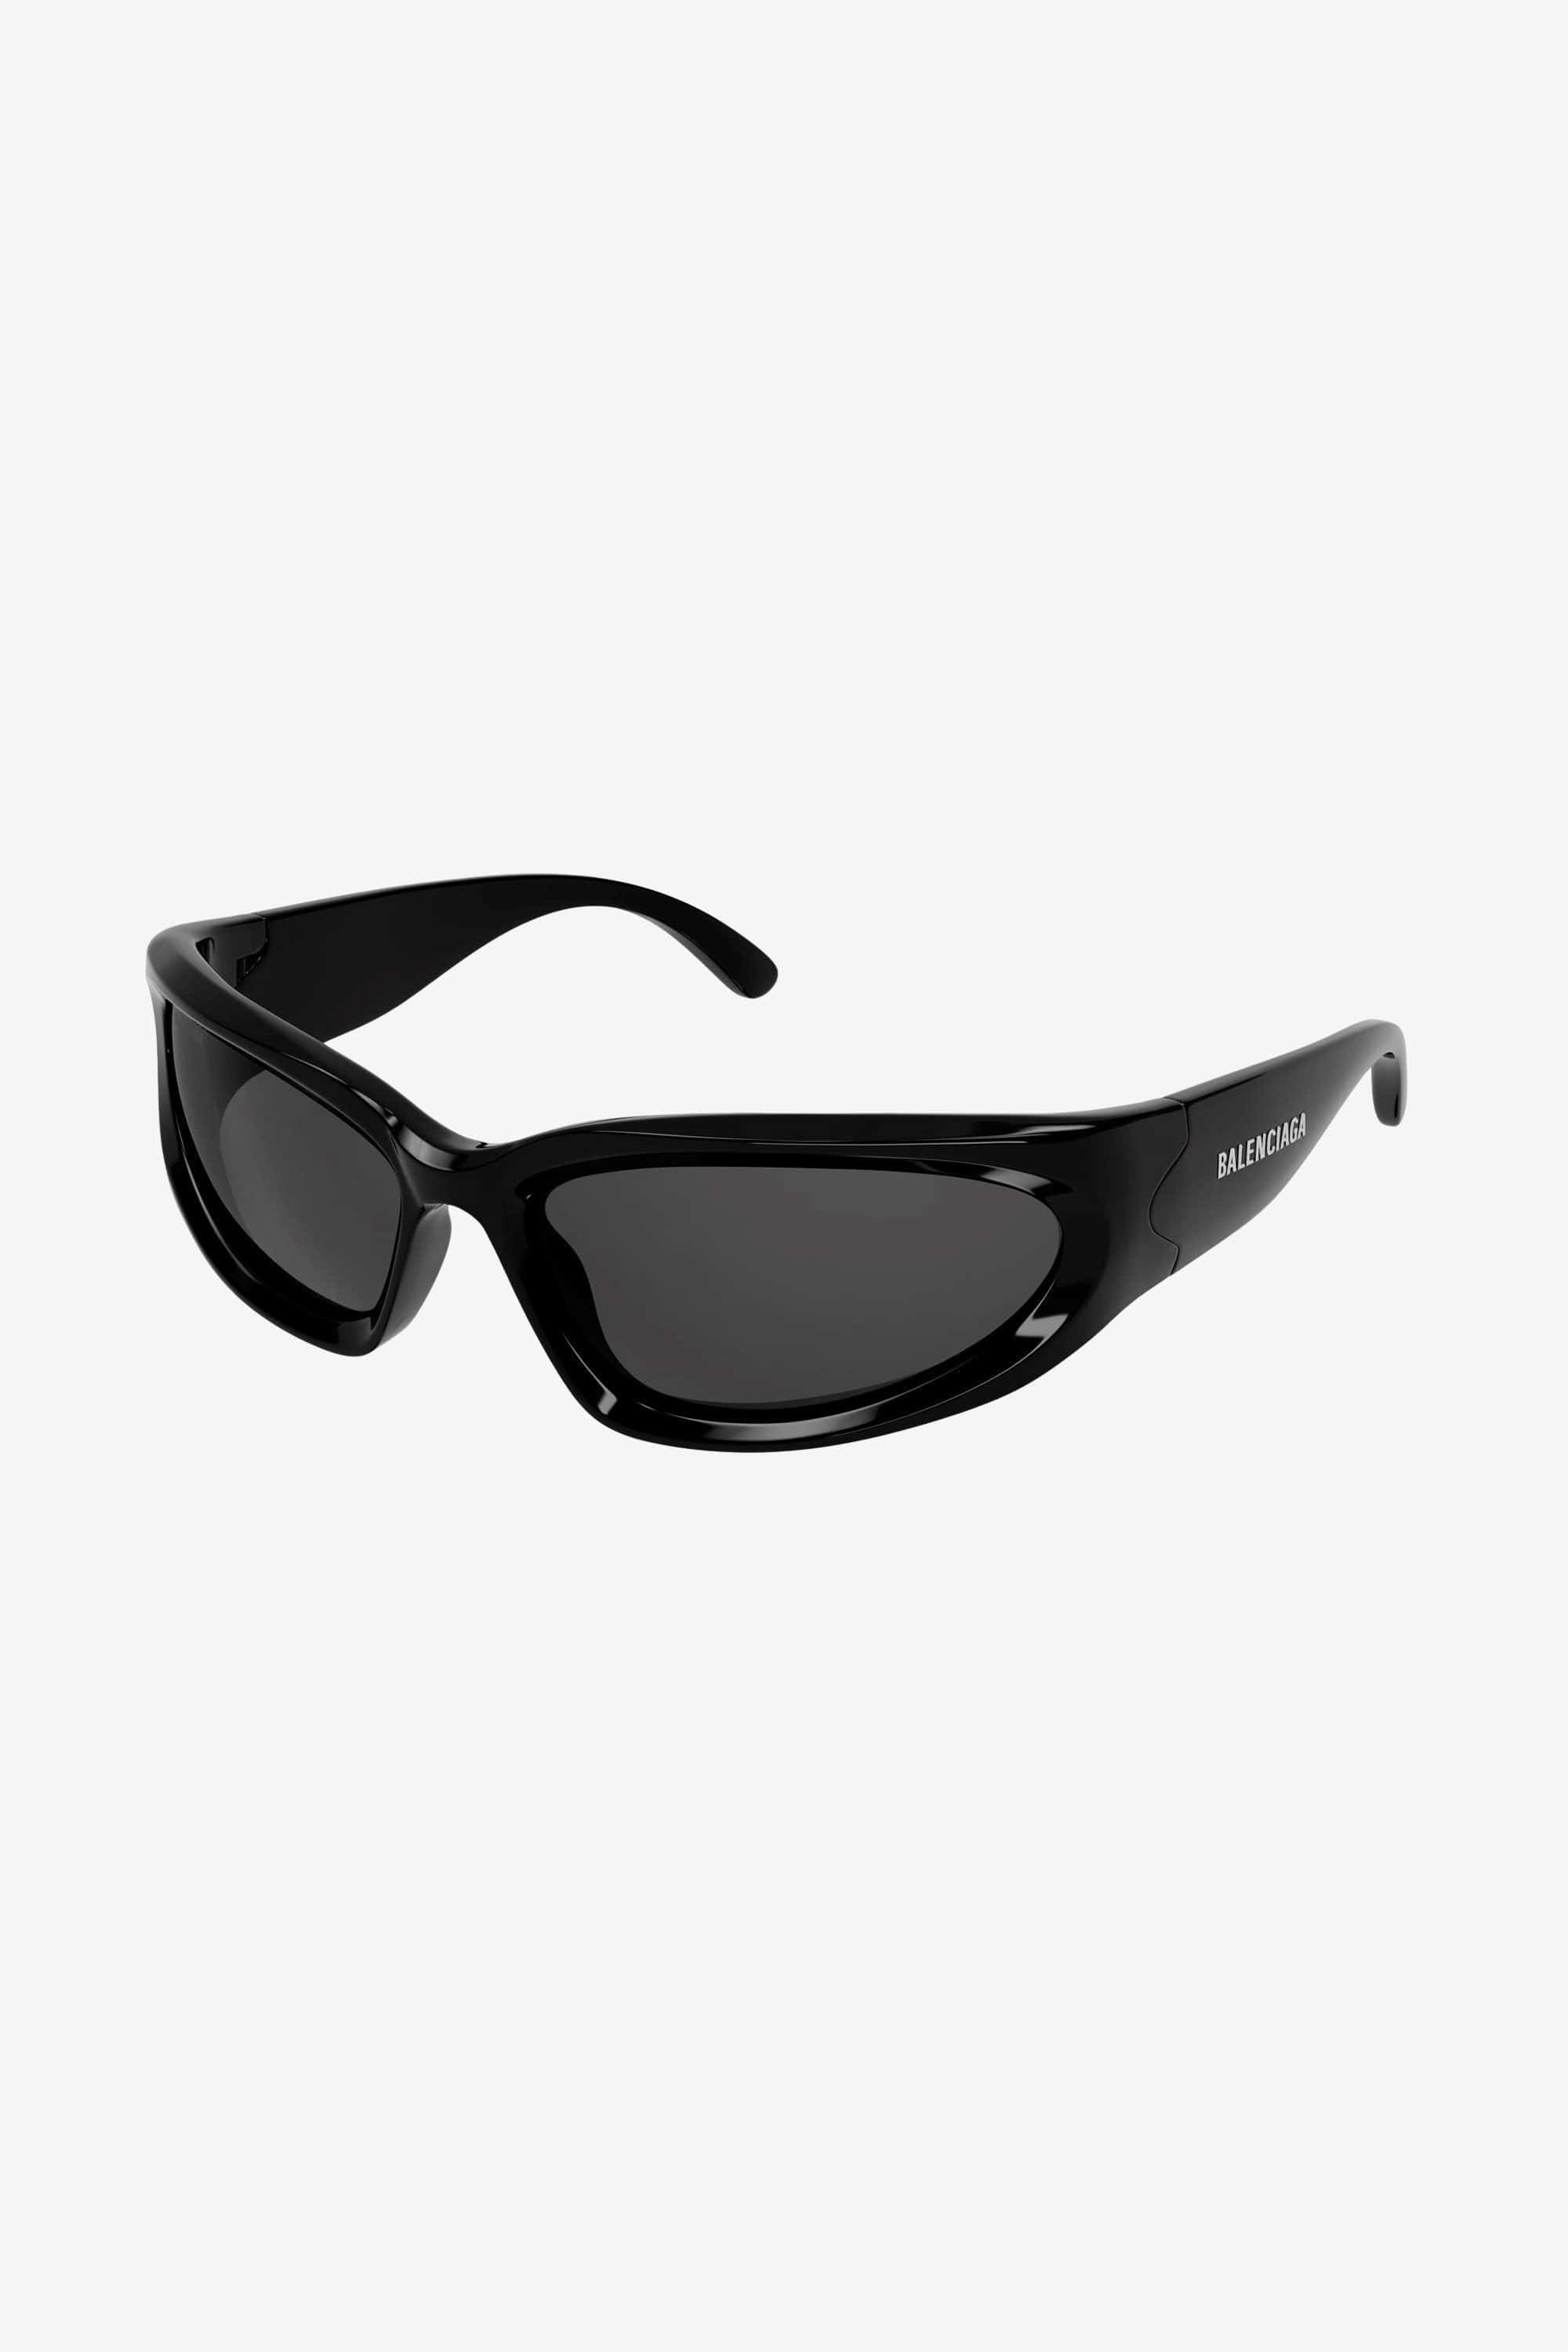 Balenciaga swift black wrap around sunglasses. Kim Kardashian and Justin Bieber sunglasses. BB0157s-001 - Eyewear Club